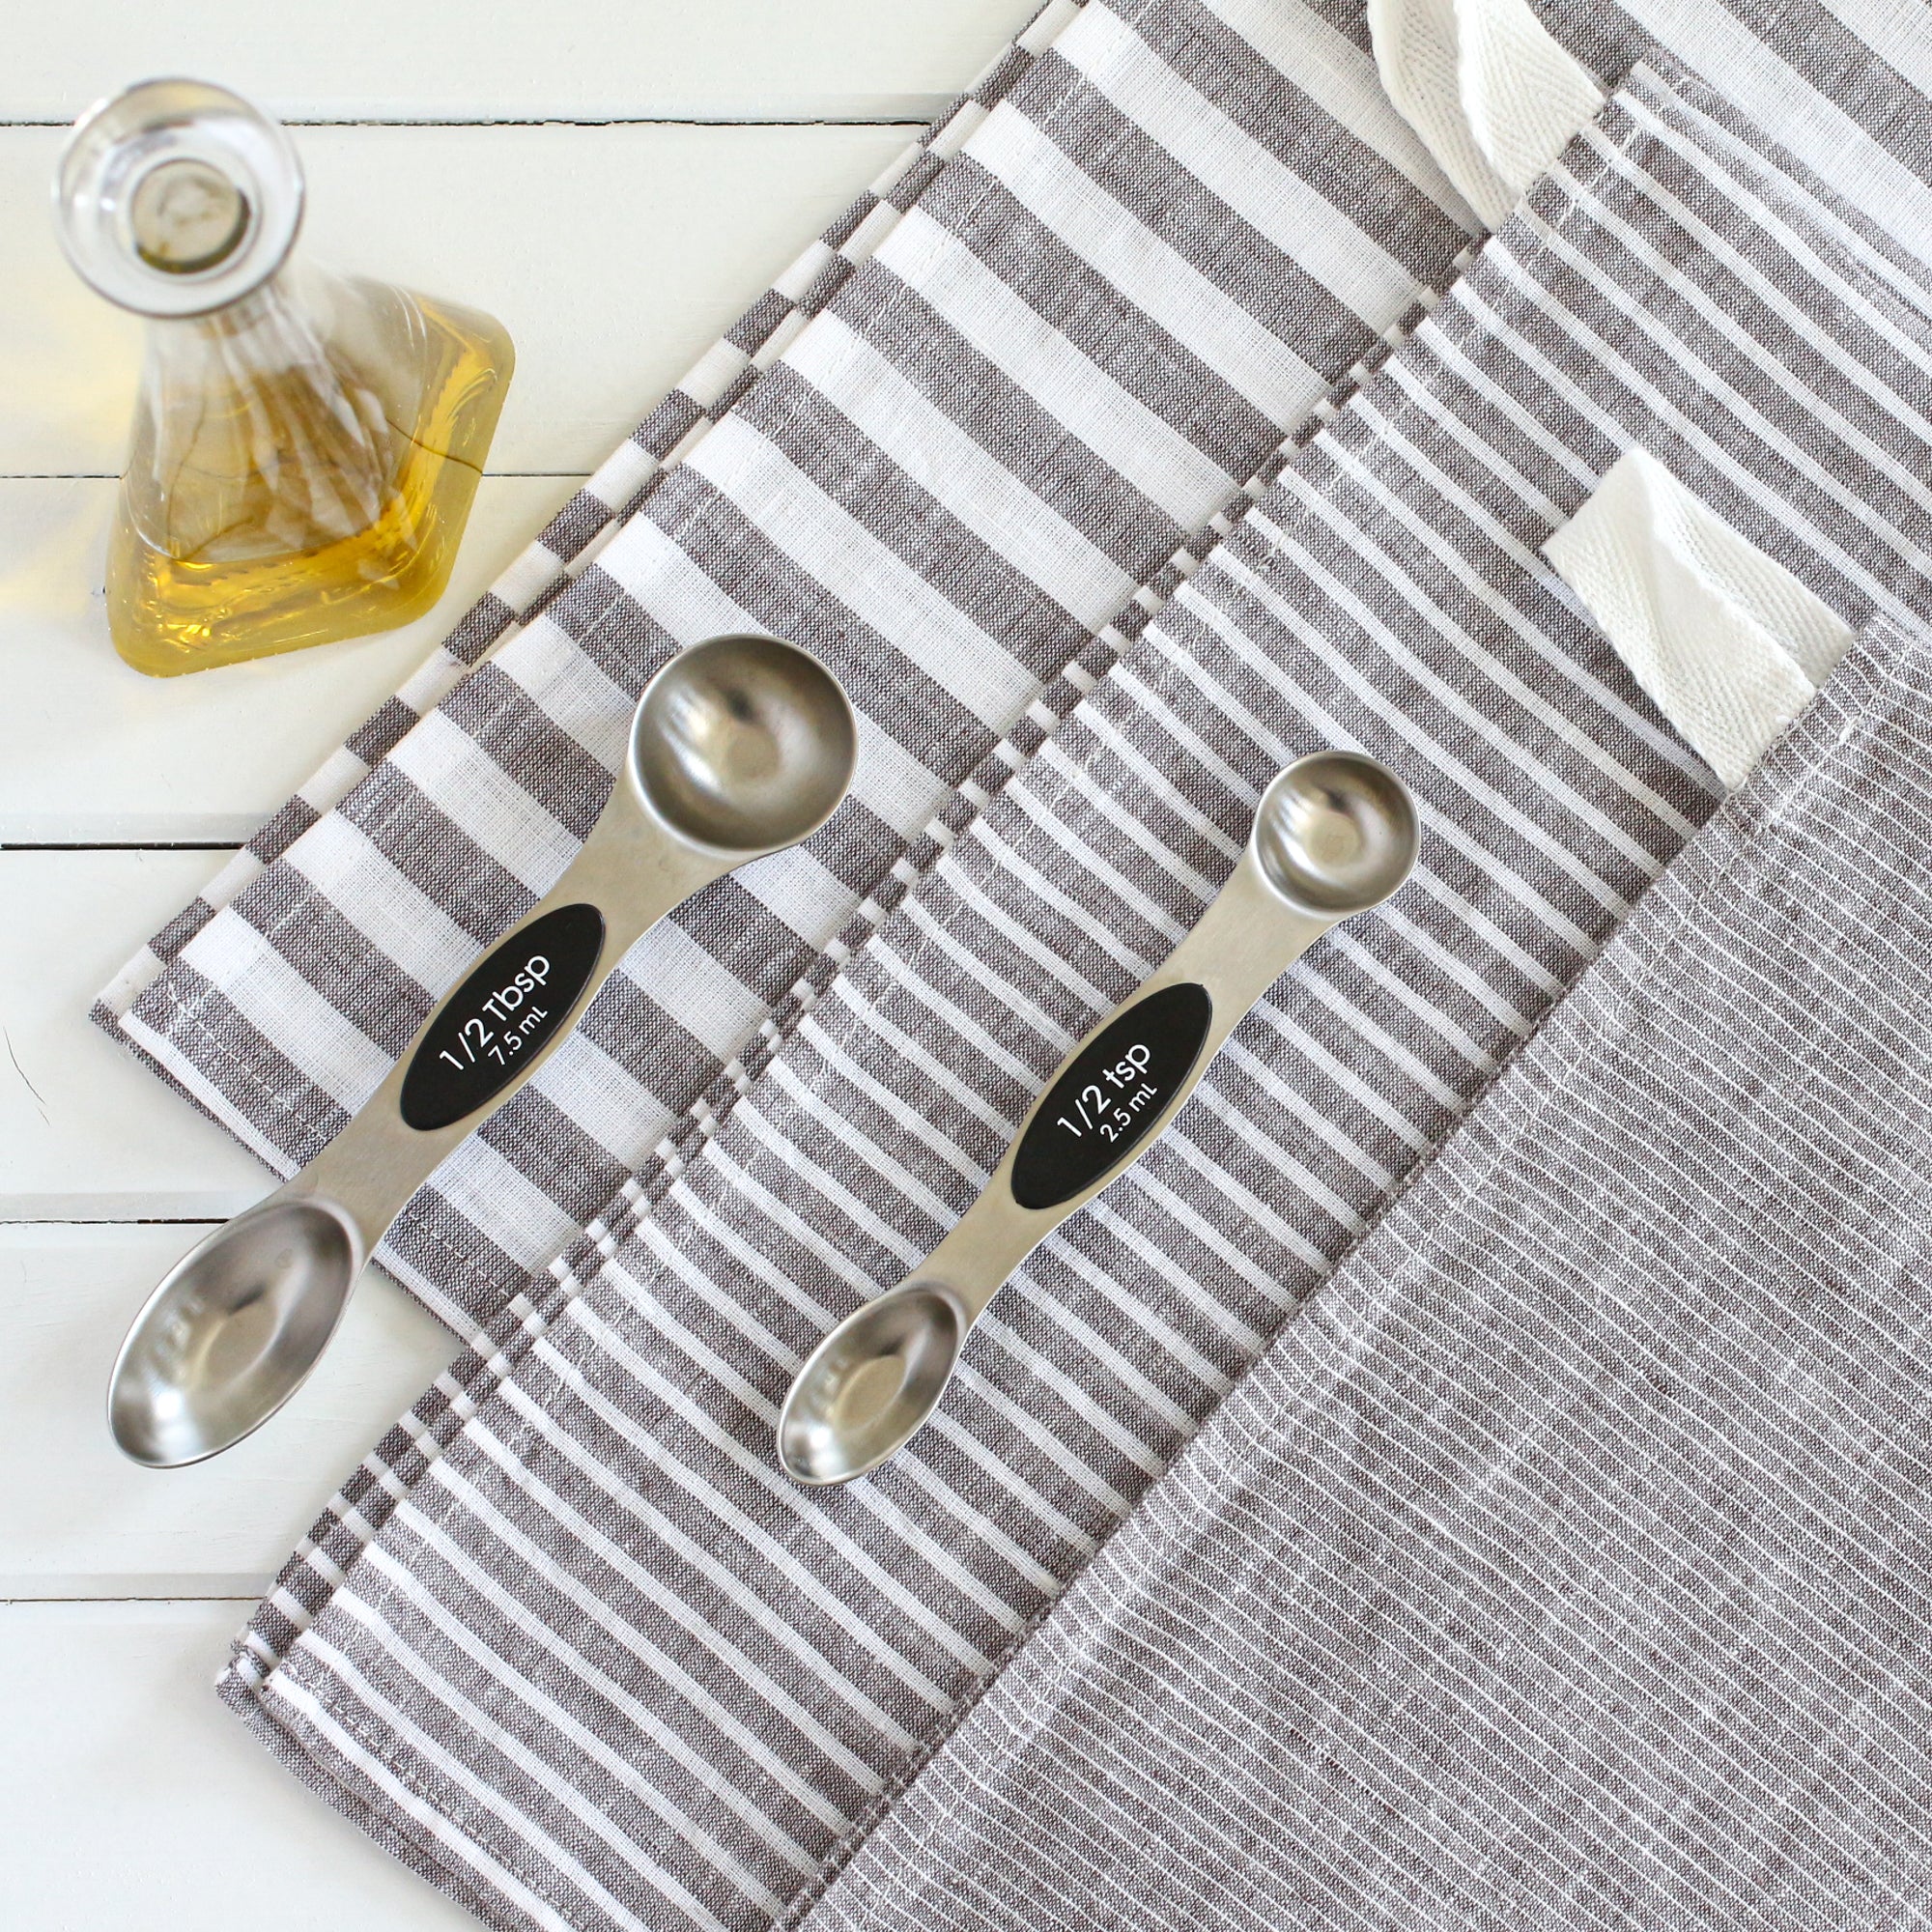 Sets of 2 Ticking Stripe Hanging Kitchen Towels